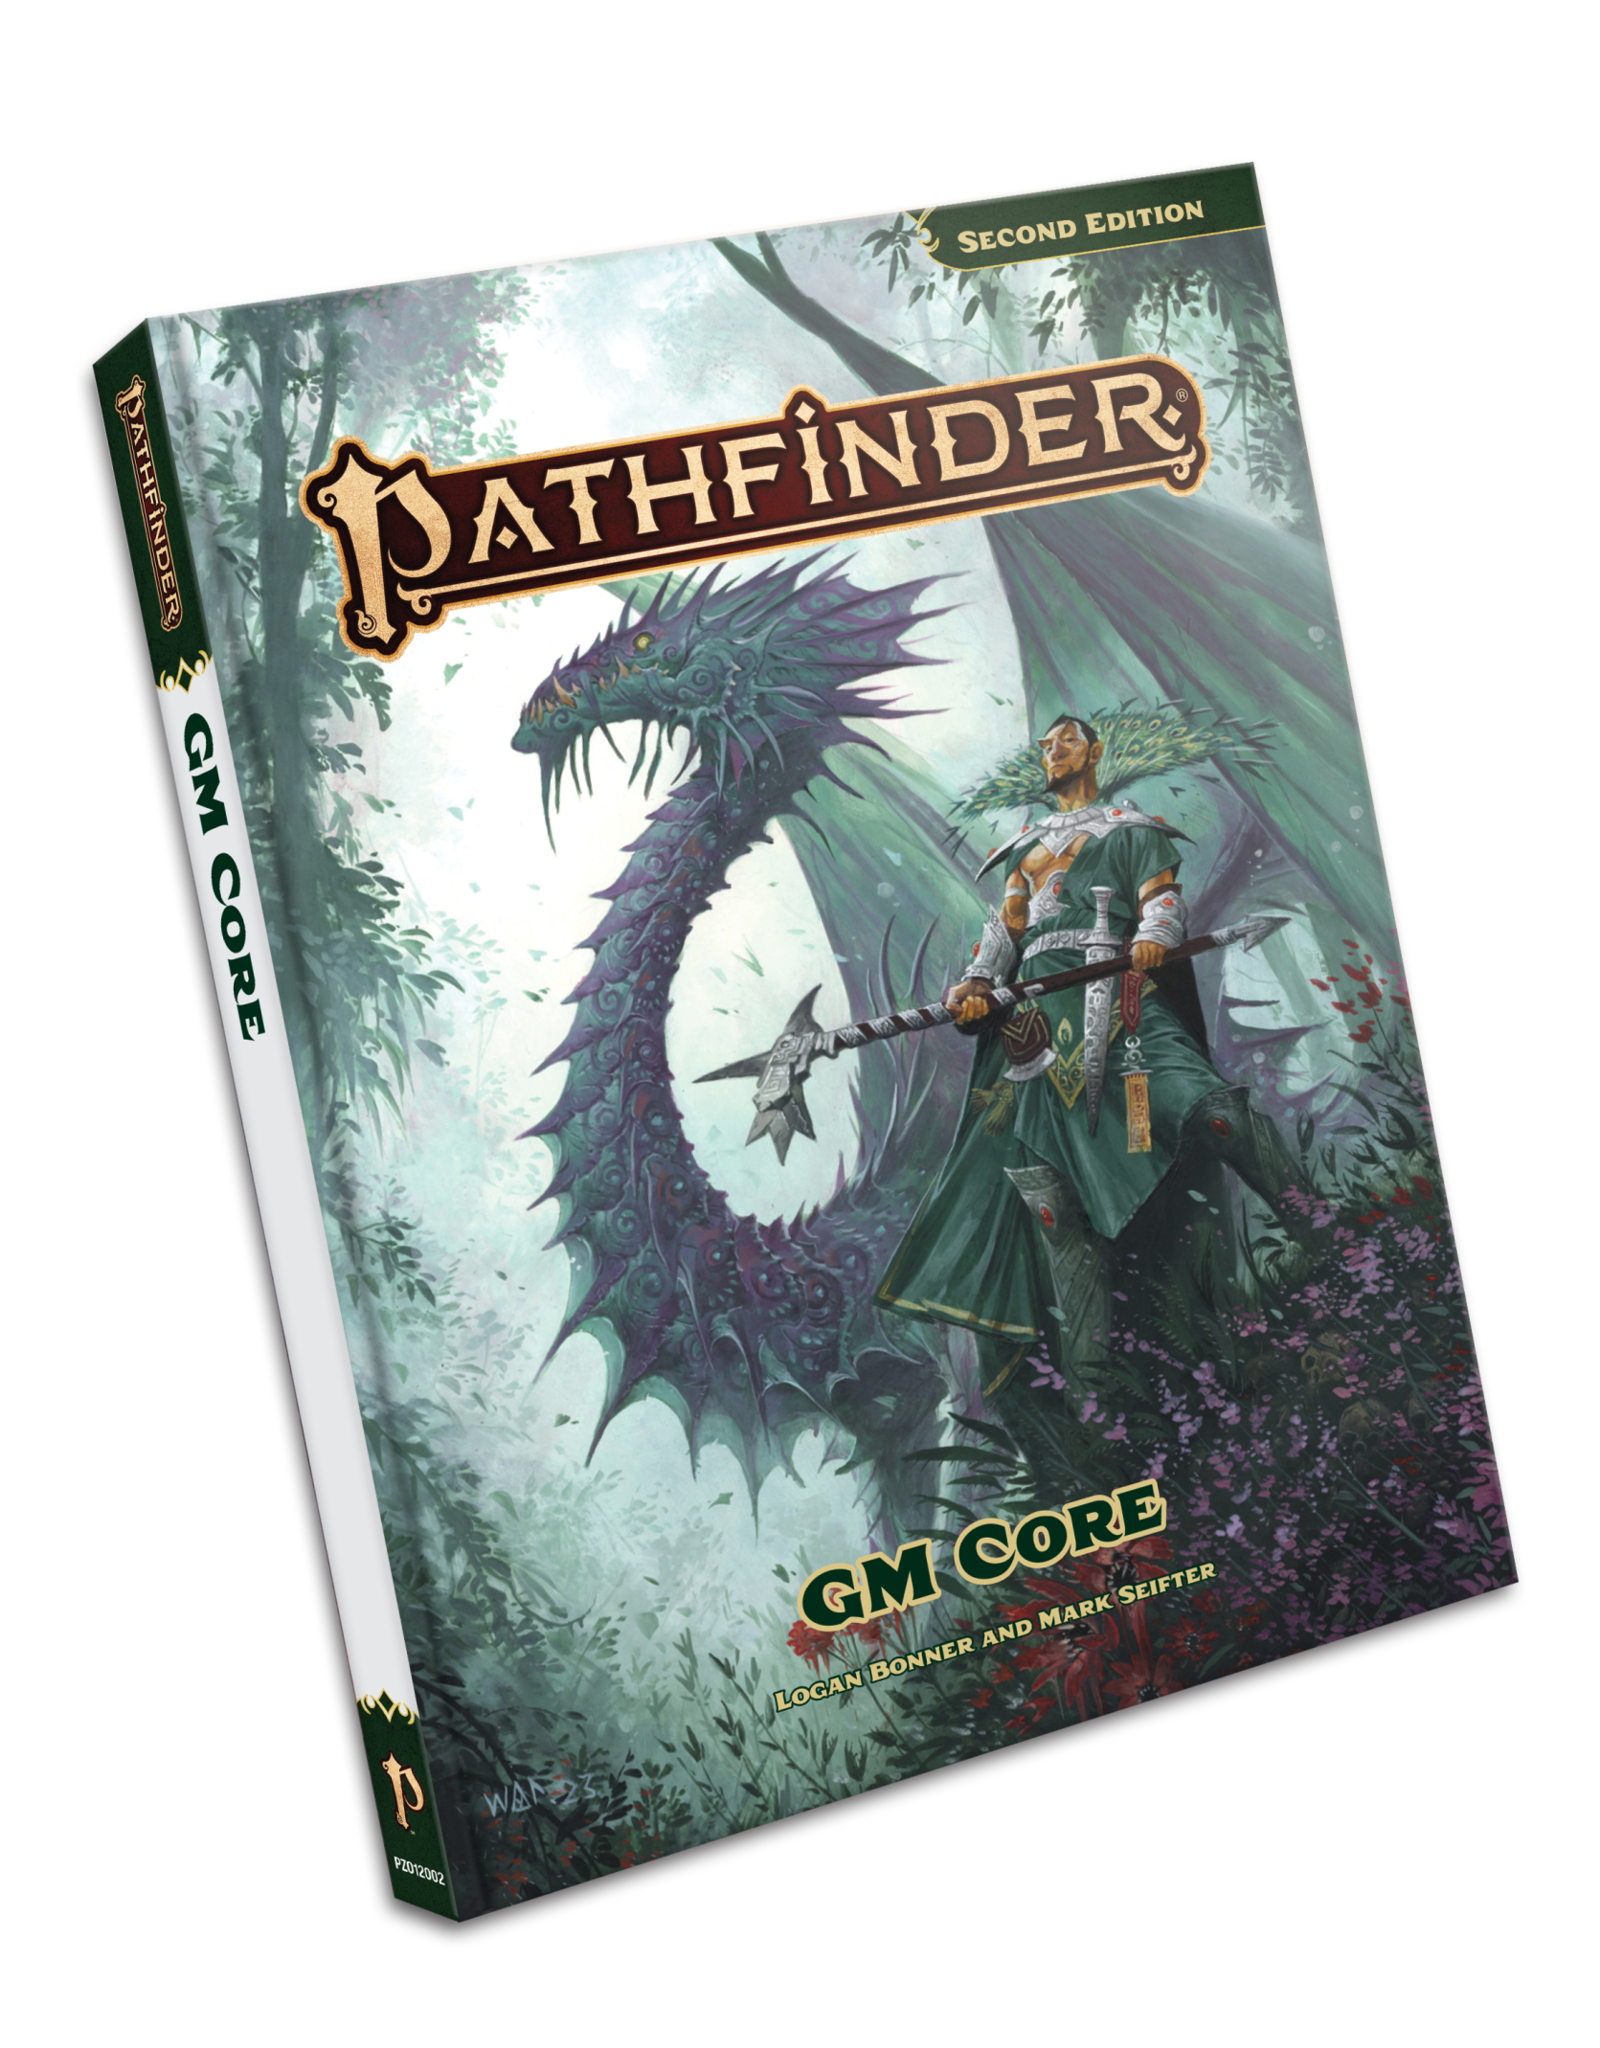 Pathfinder RPG: GM Core Rulebook Hardcover (P2)